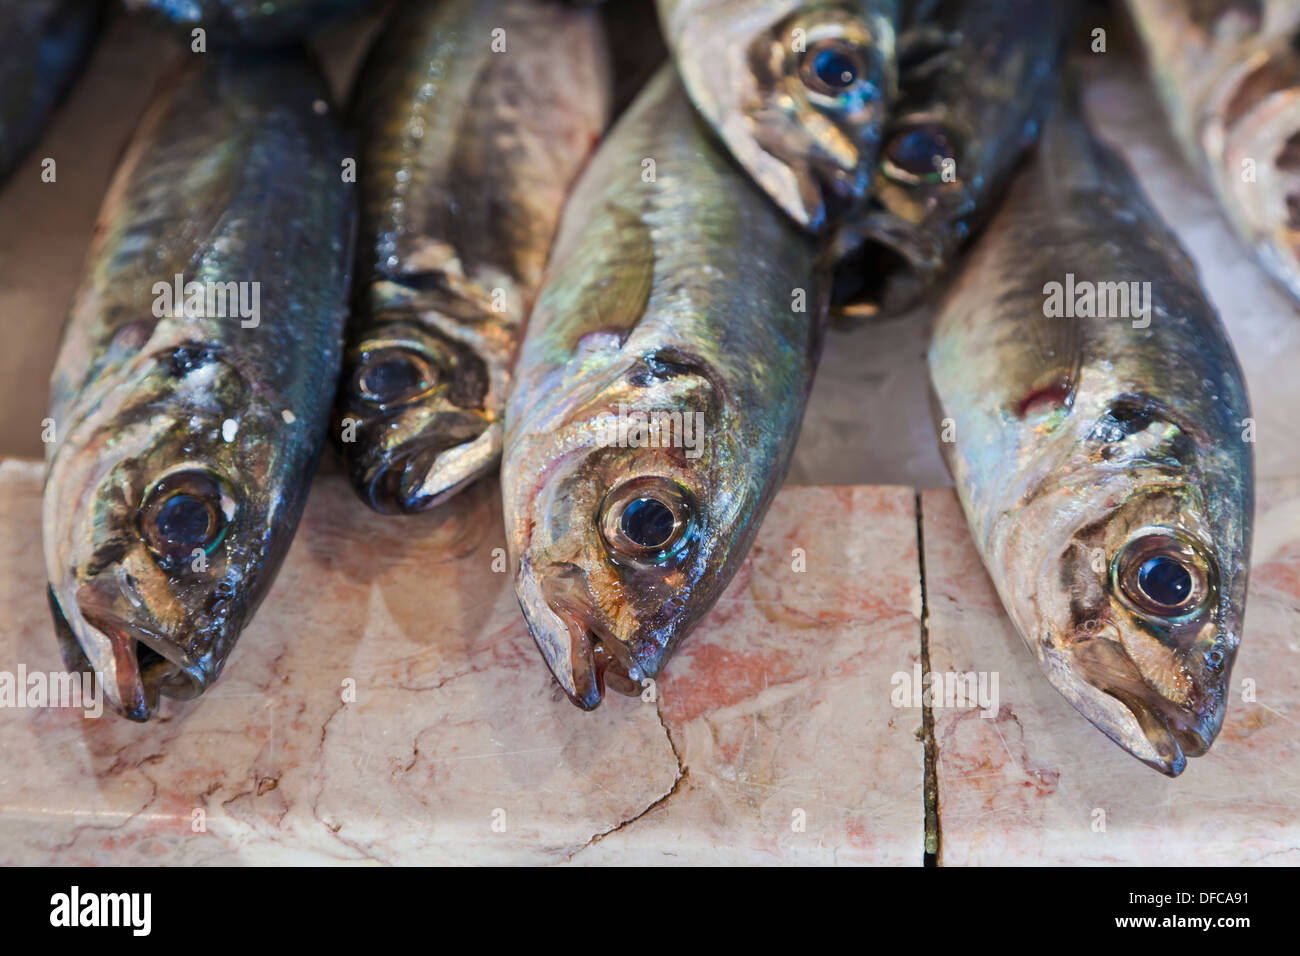 Le Portugal, Lagos, poisson chinchard Banque D'Images